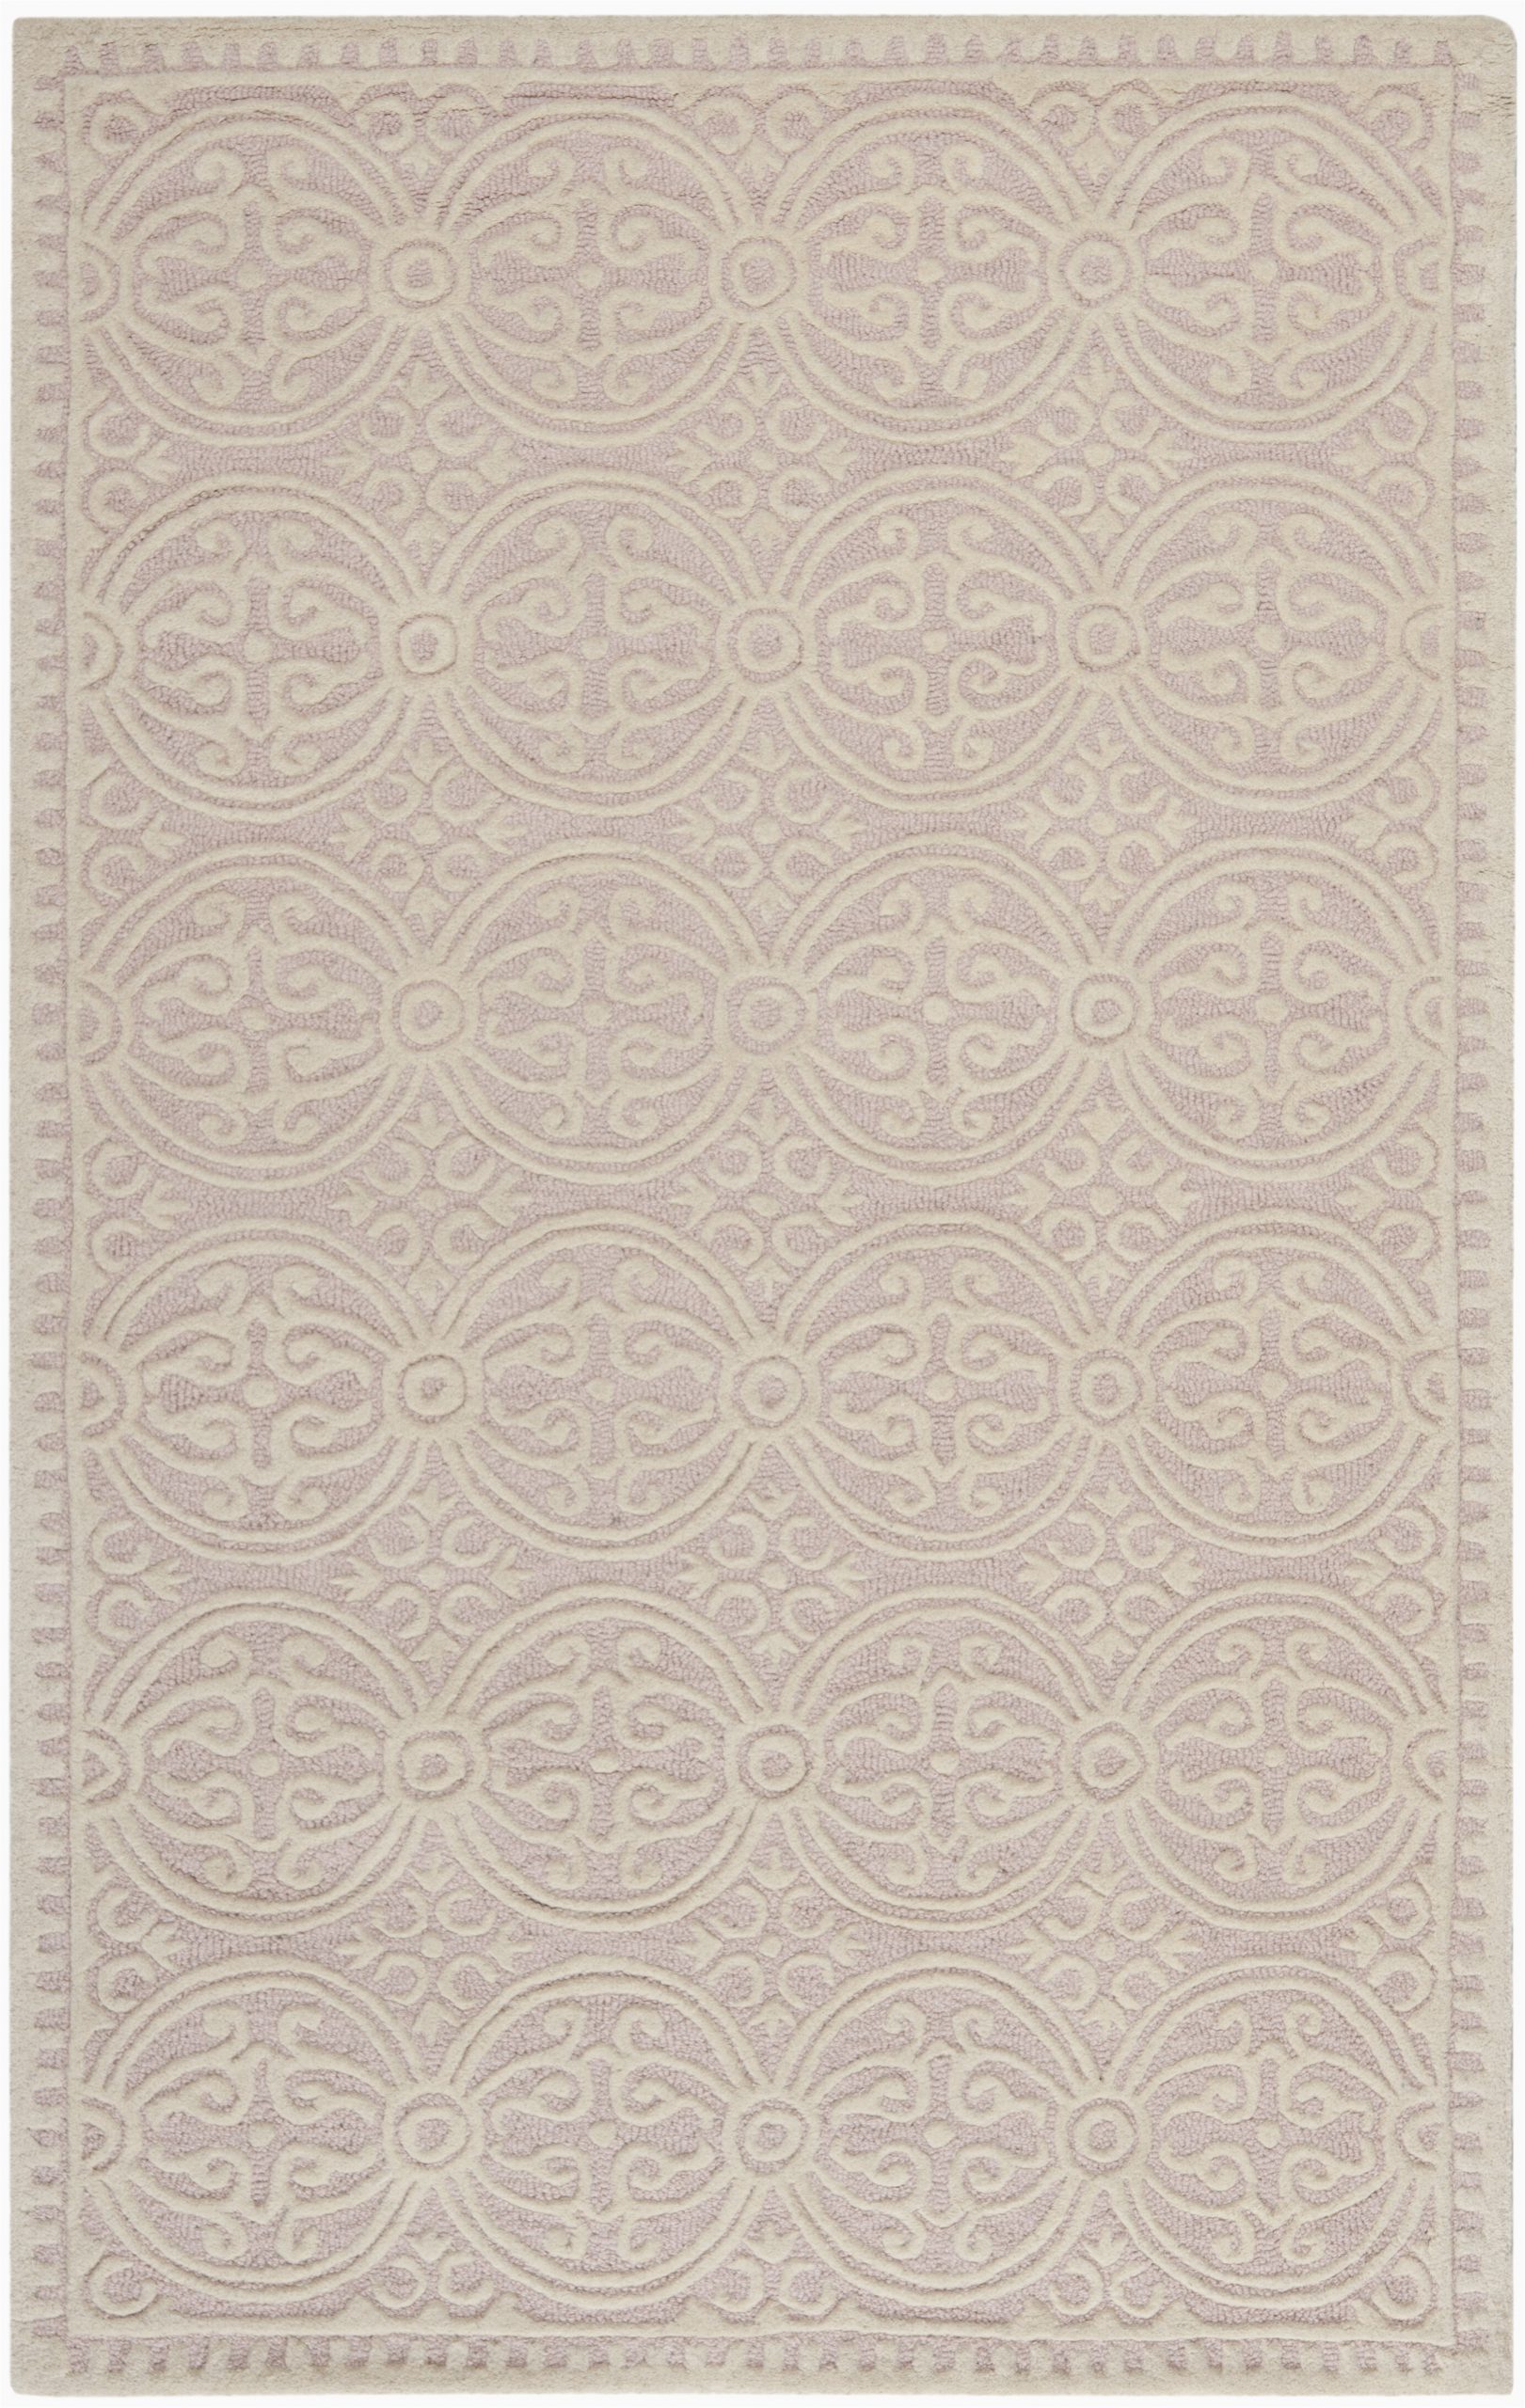 Light Pink area Rug 8×10 Whitchurch Geometric Handmade Wool Light Pink Ivory area Rug